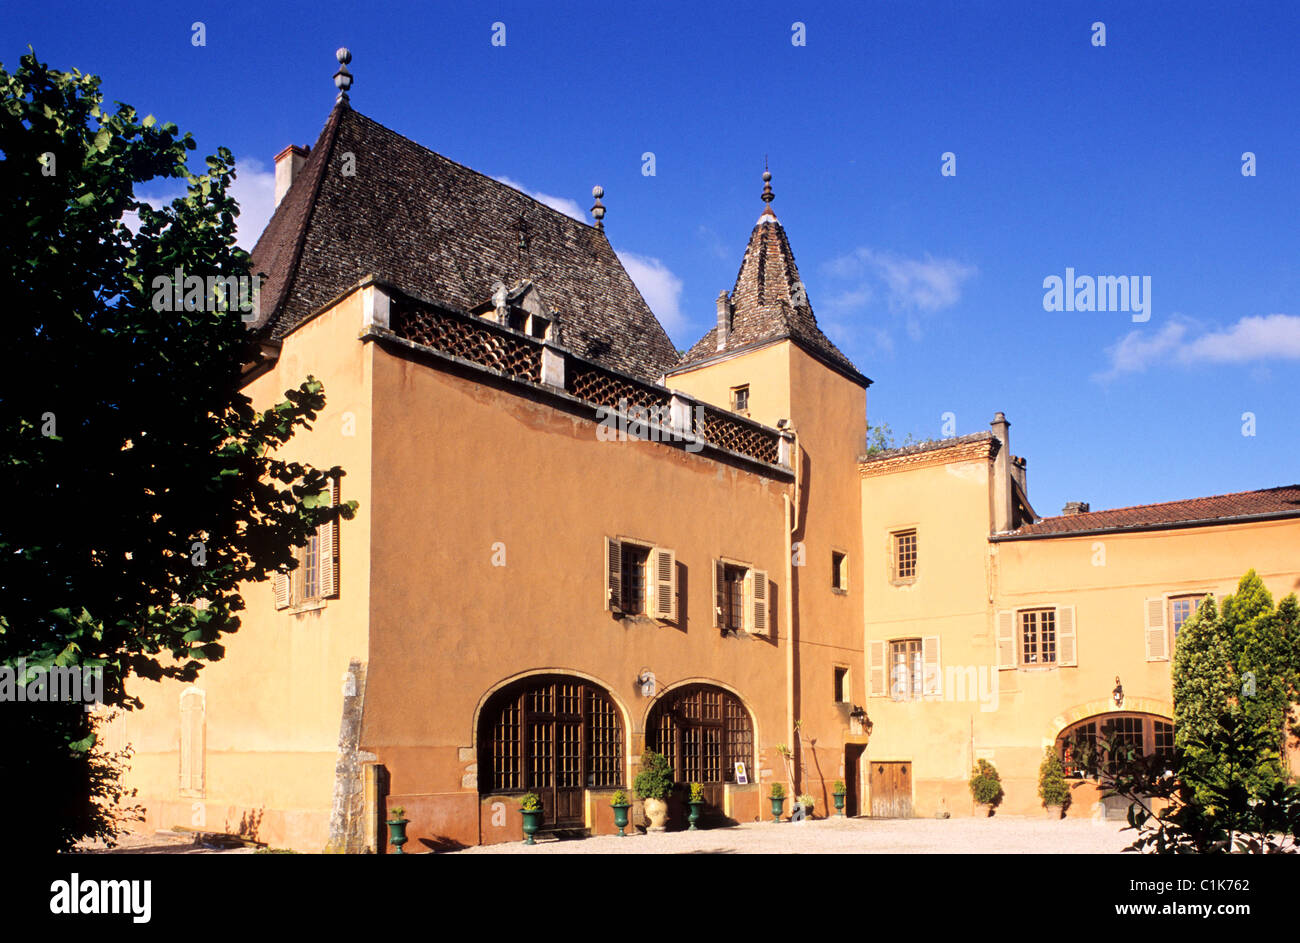 France, Rhone, Beaujolais region, Venerie castle Stock Photo